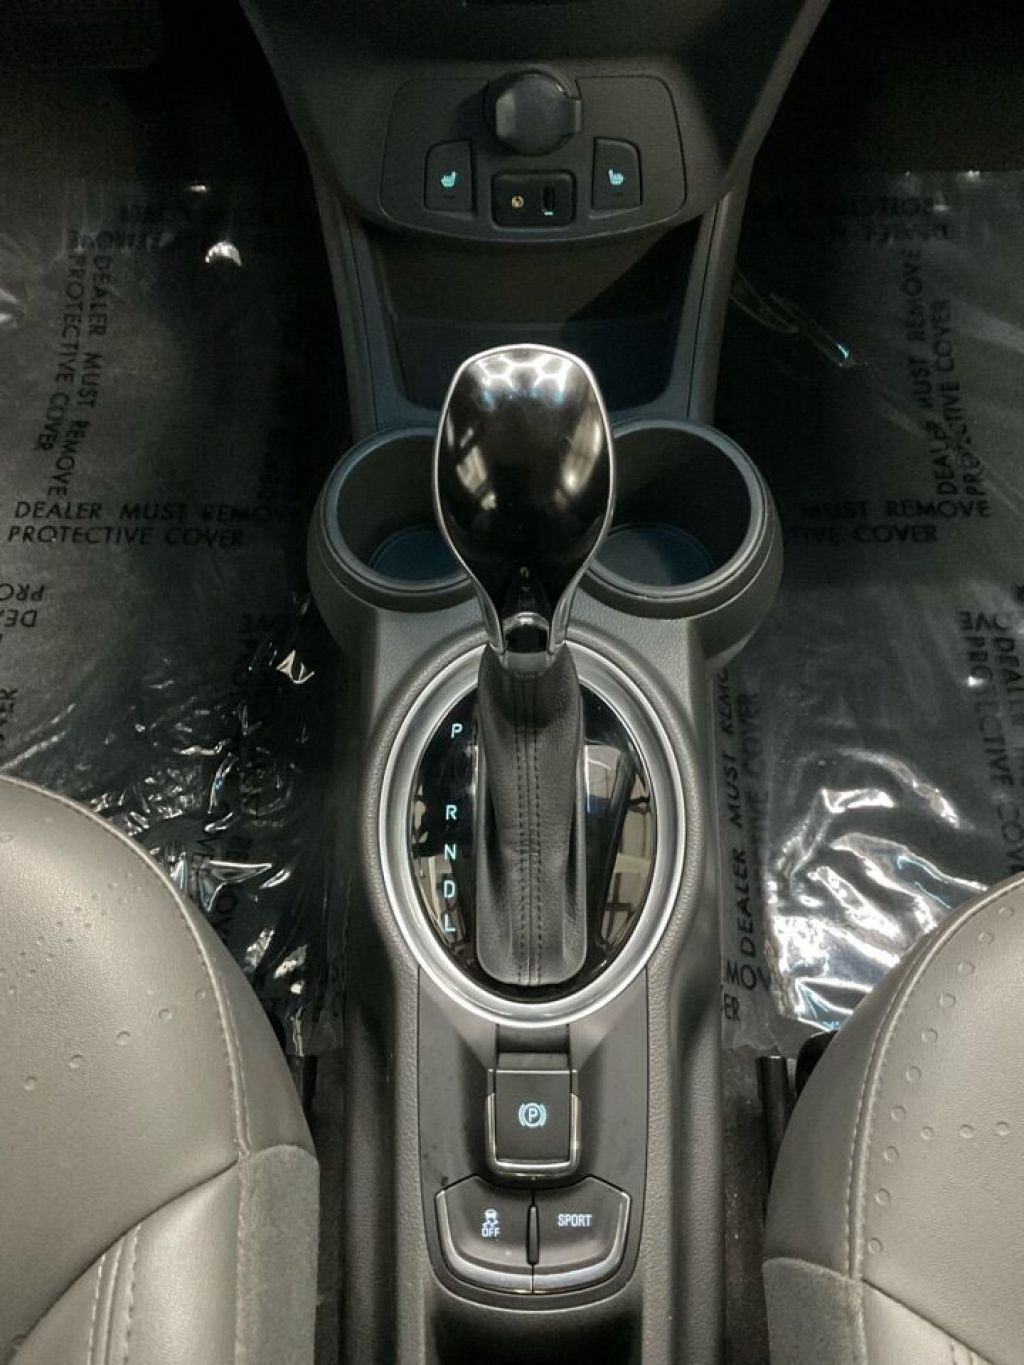 2015 Chevrolet Spark EV